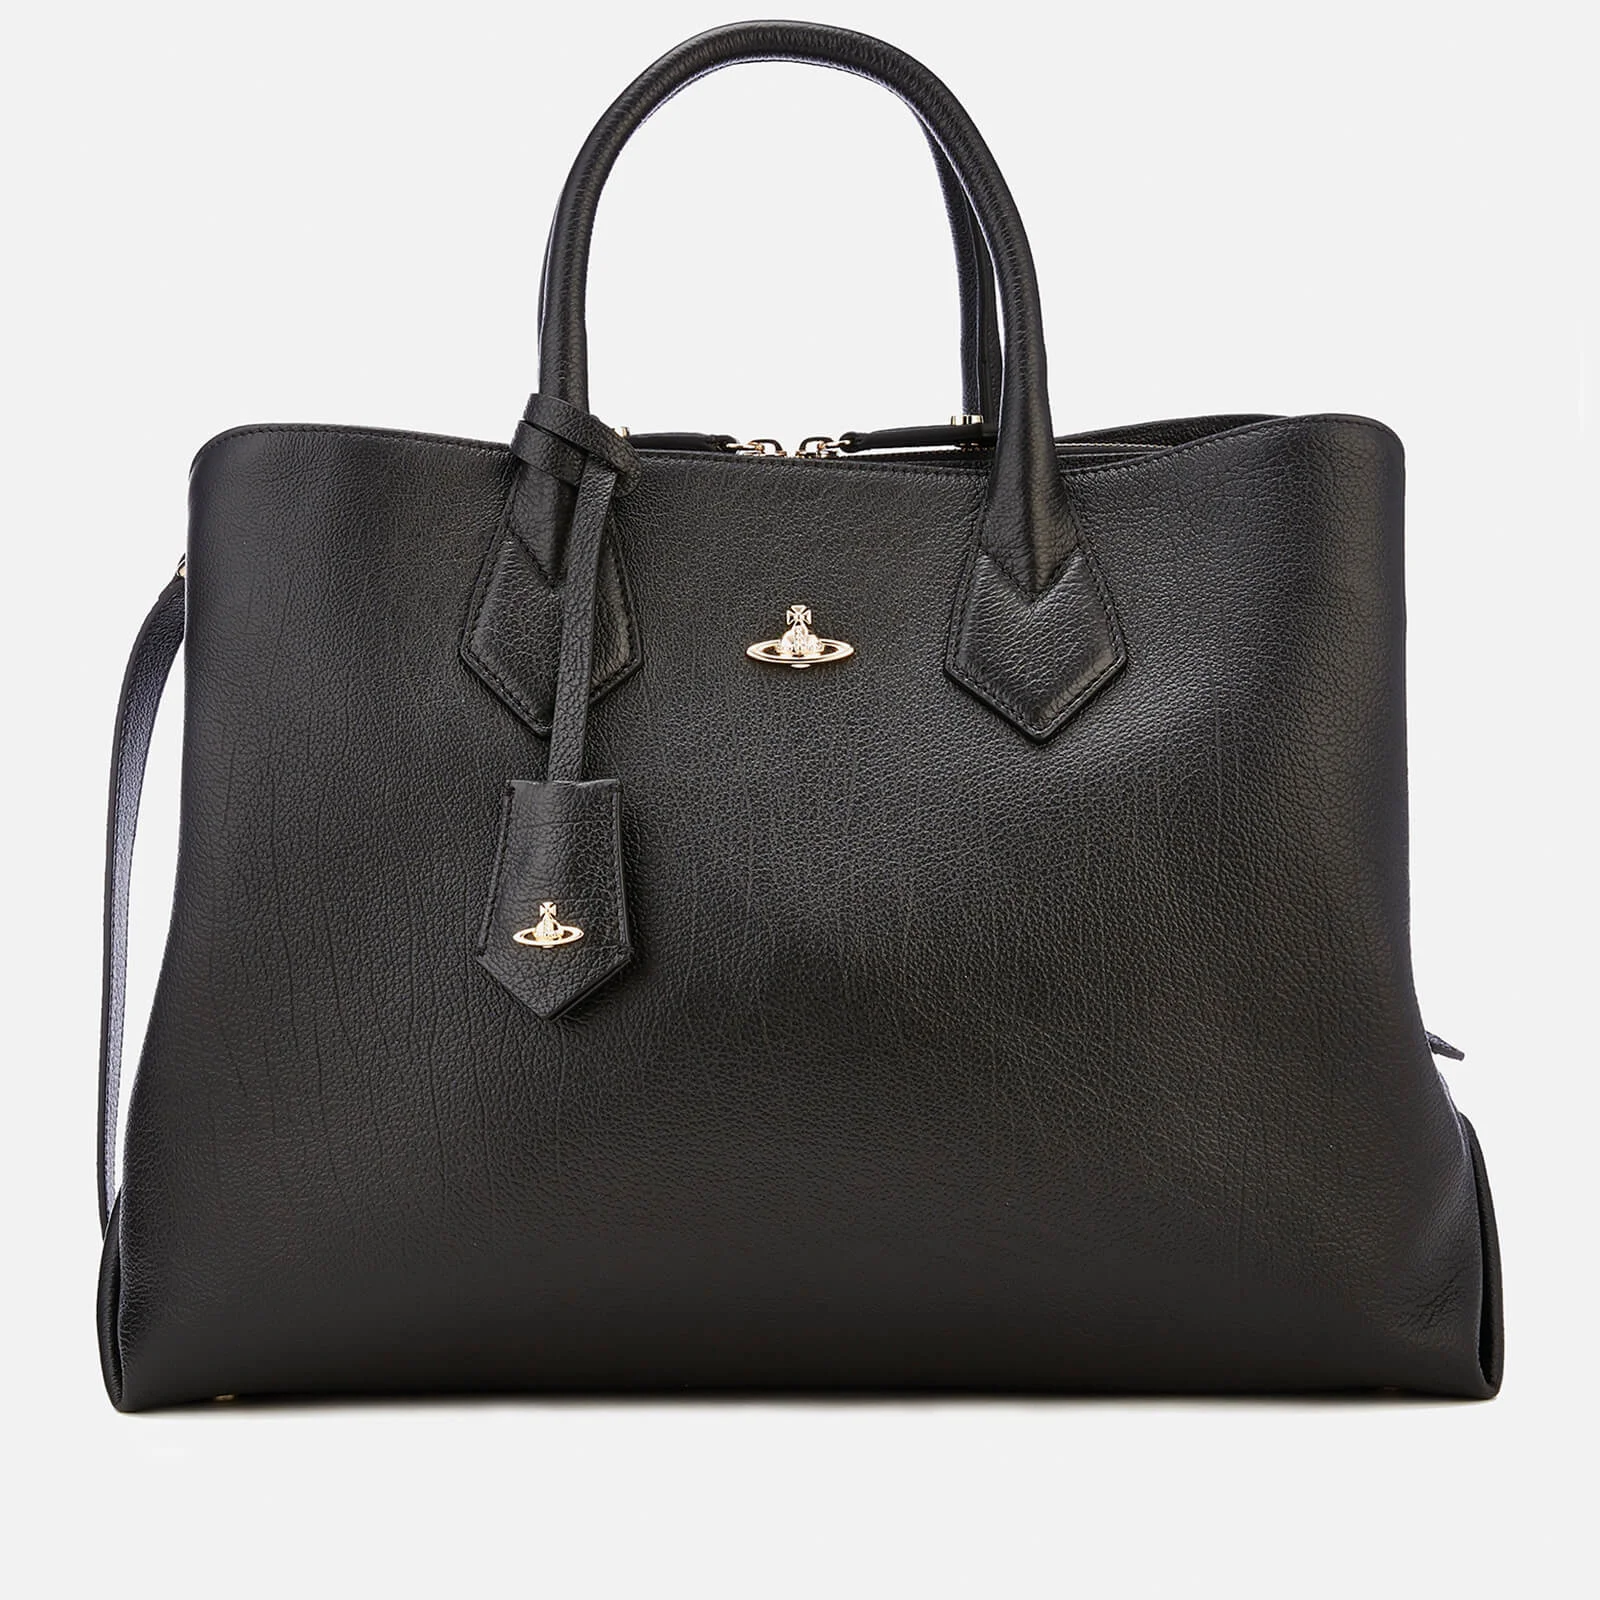 Vivienne Westwood Women's Balmoral Shopper Handbag - Black Image 1